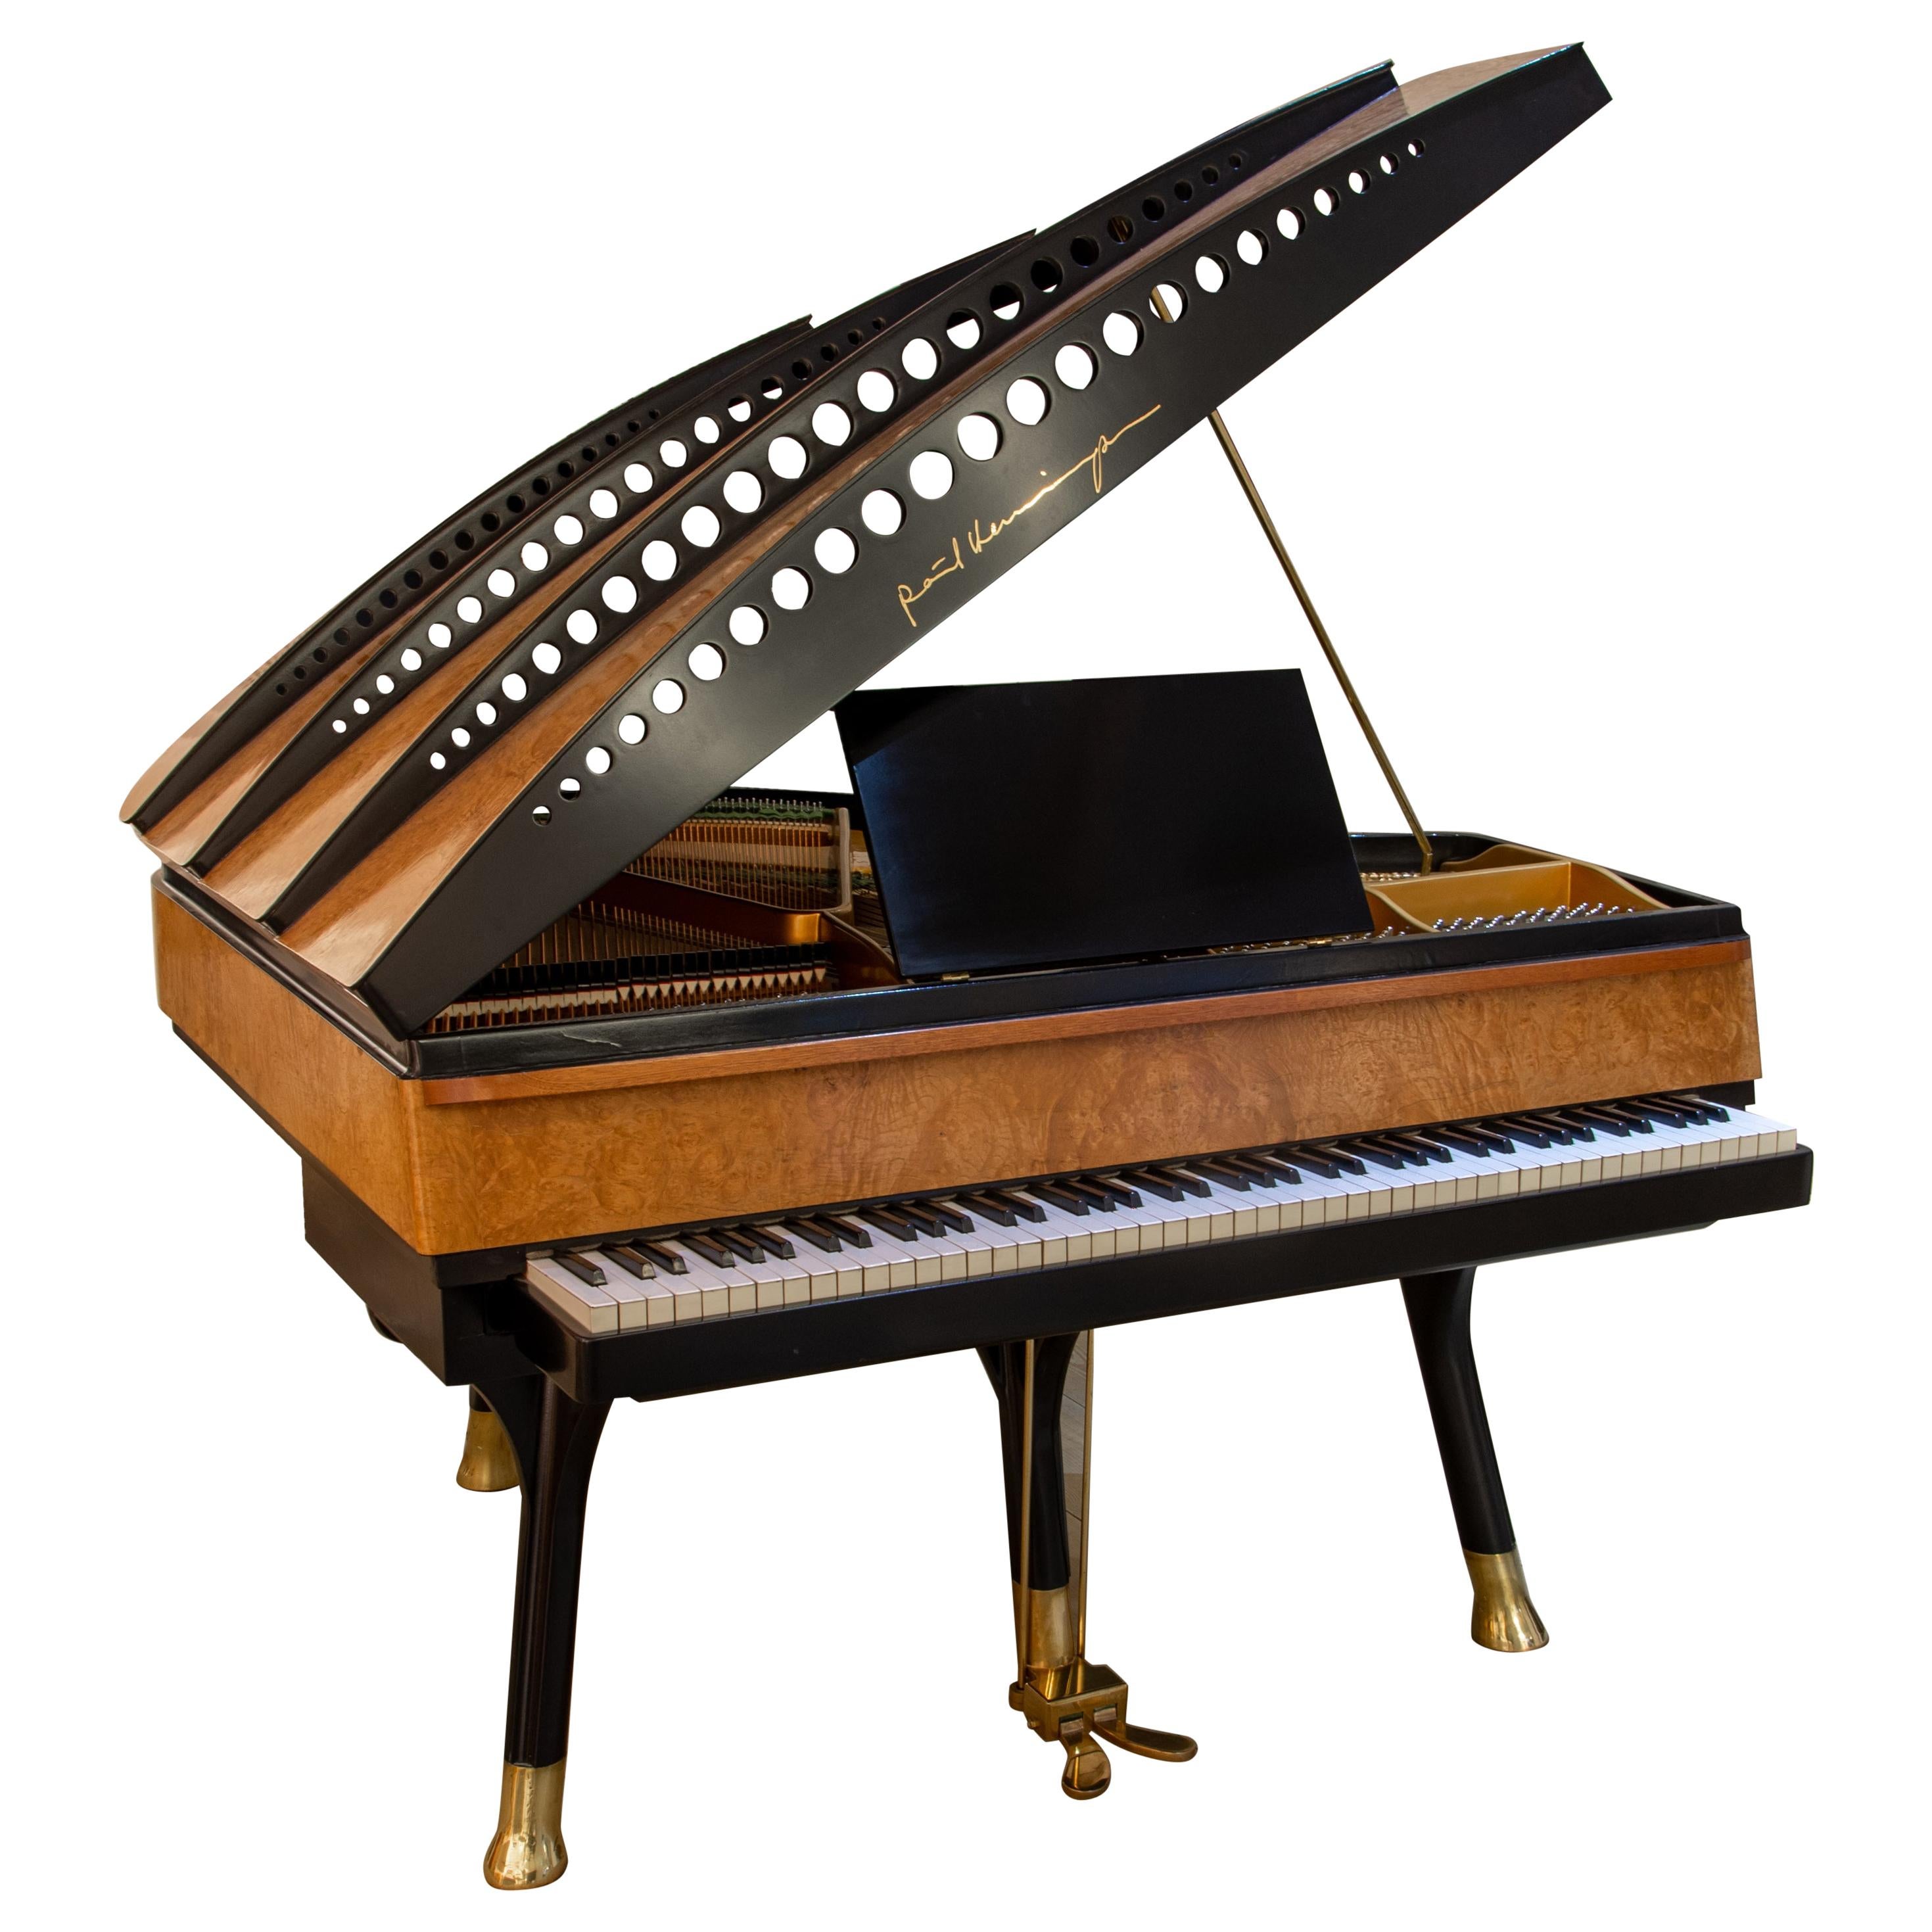 PH Bow Grand Piano, Matte Chestnut Wood with Brass Details, Modern, Sculptural